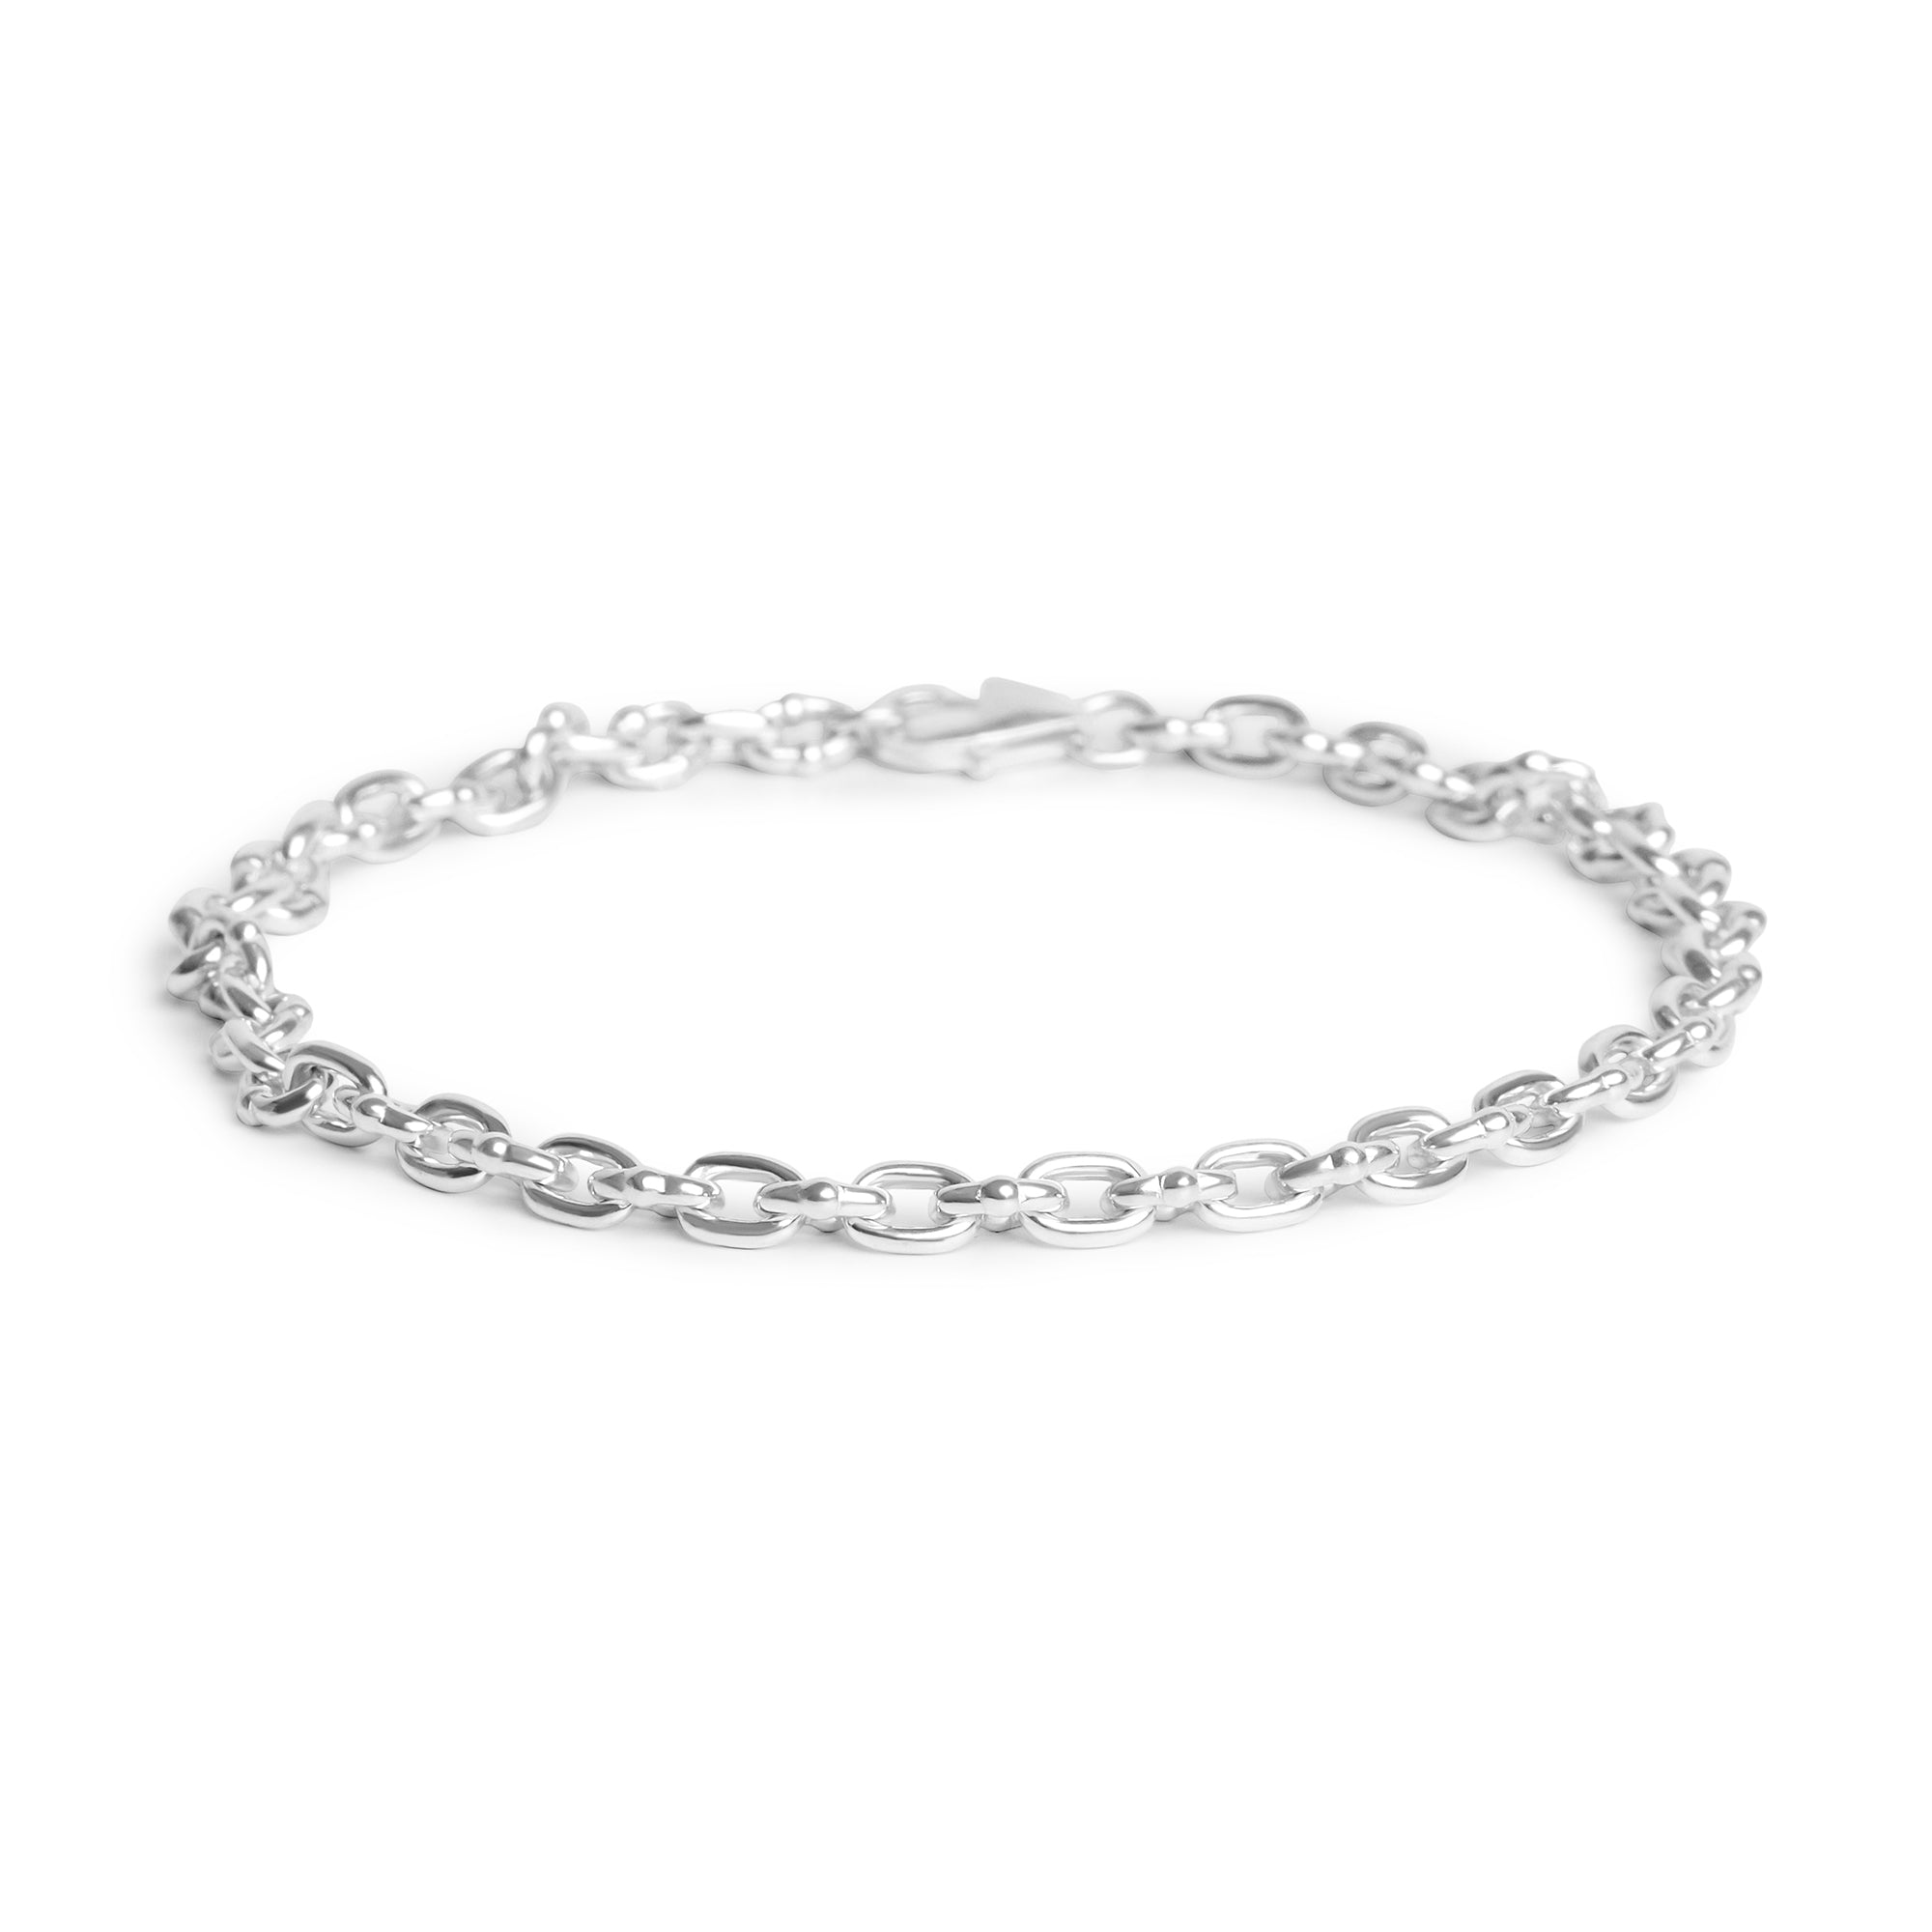 Thin Silver Umlaut Link Bracelet